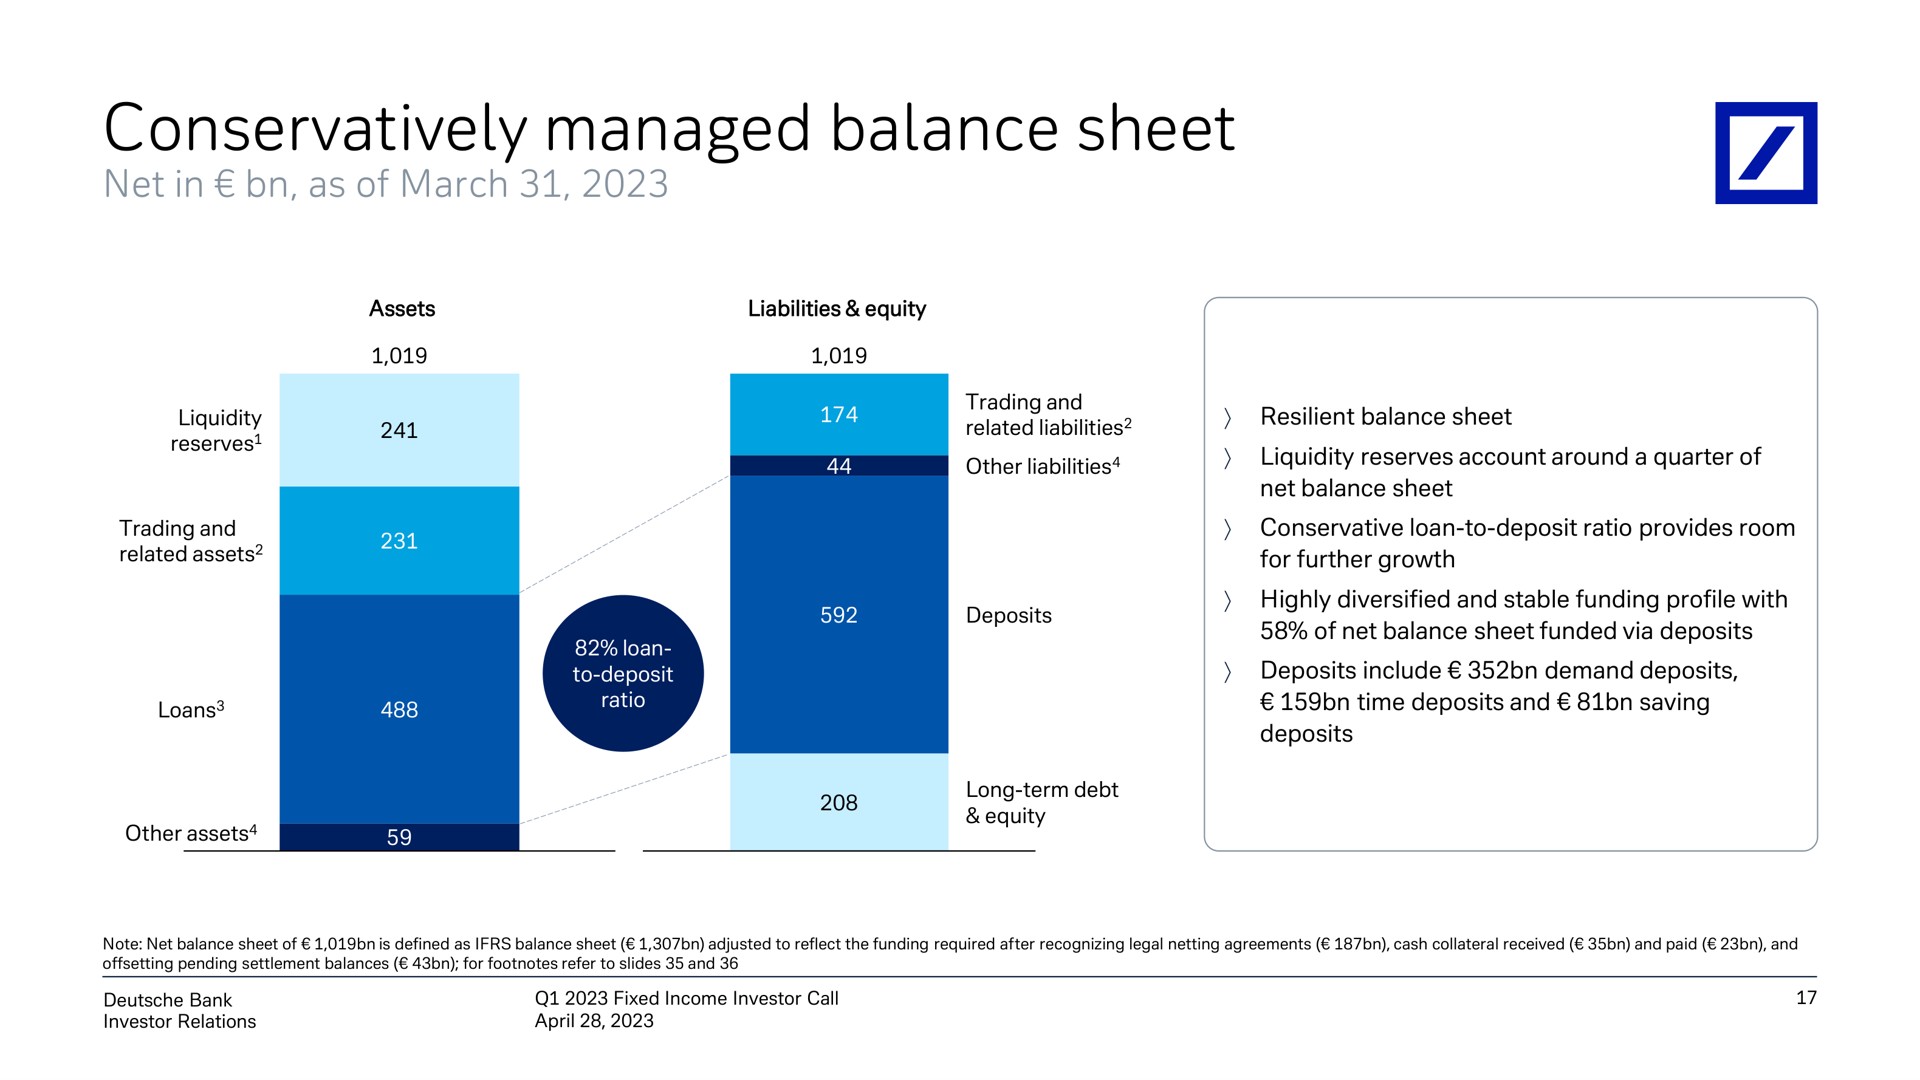 conservatively managed balance sheet | Deutsche Bank